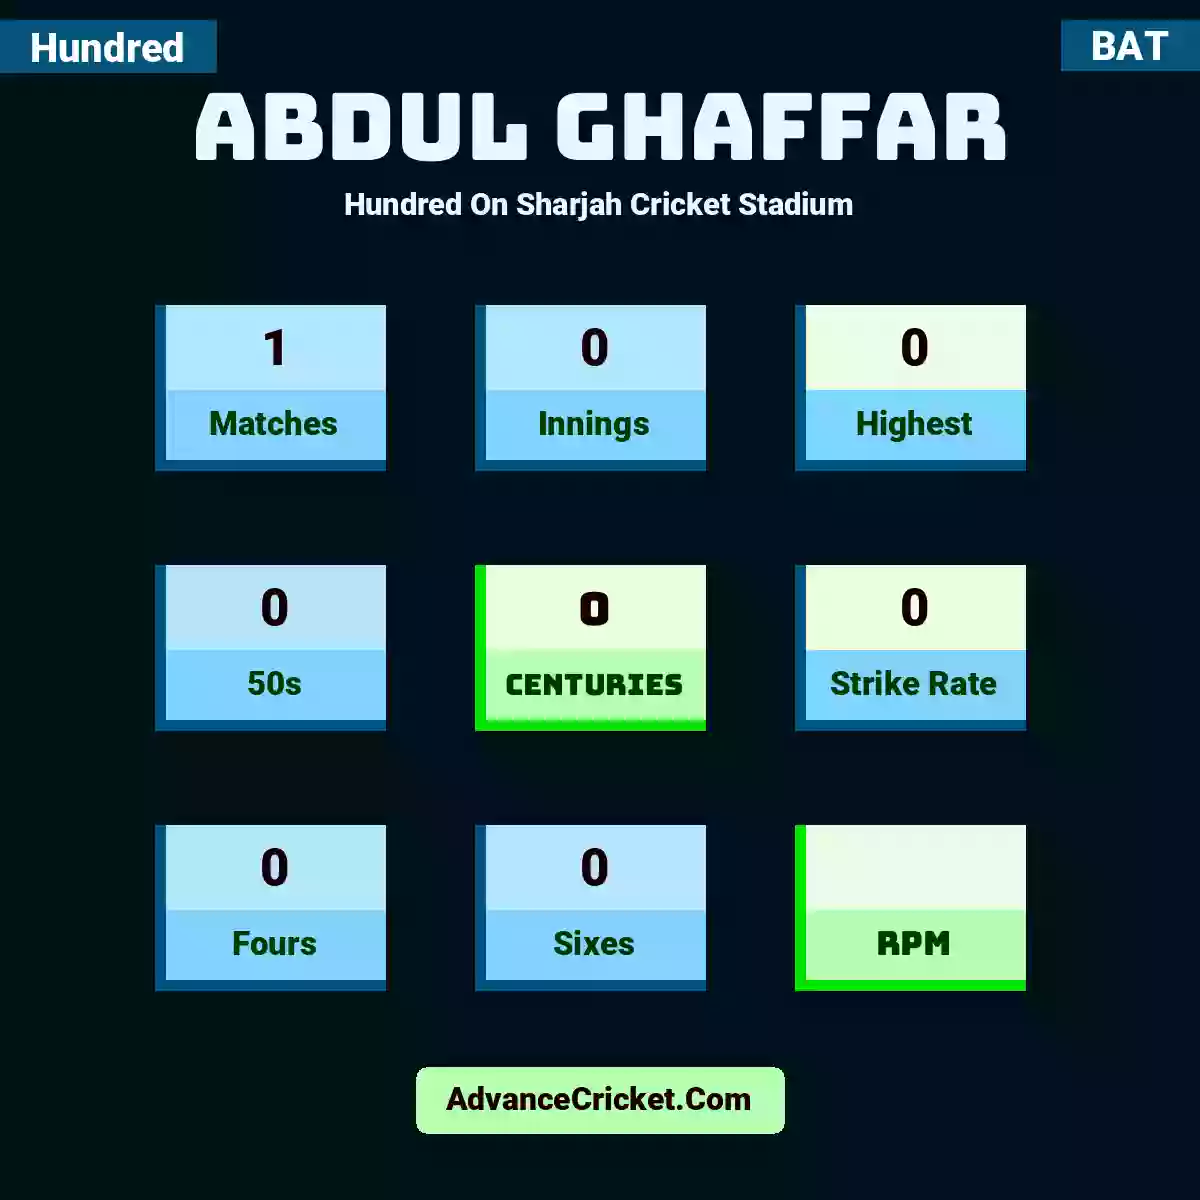 Abdul Ghaffar Hundred  On Sharjah Cricket Stadium, Abdul Ghaffar played 1 matches, scored 0 runs as highest, 0 half-centuries, and 0 centuries, with a strike rate of 0. A.Ghaffar hit 0 fours and 0 sixes.